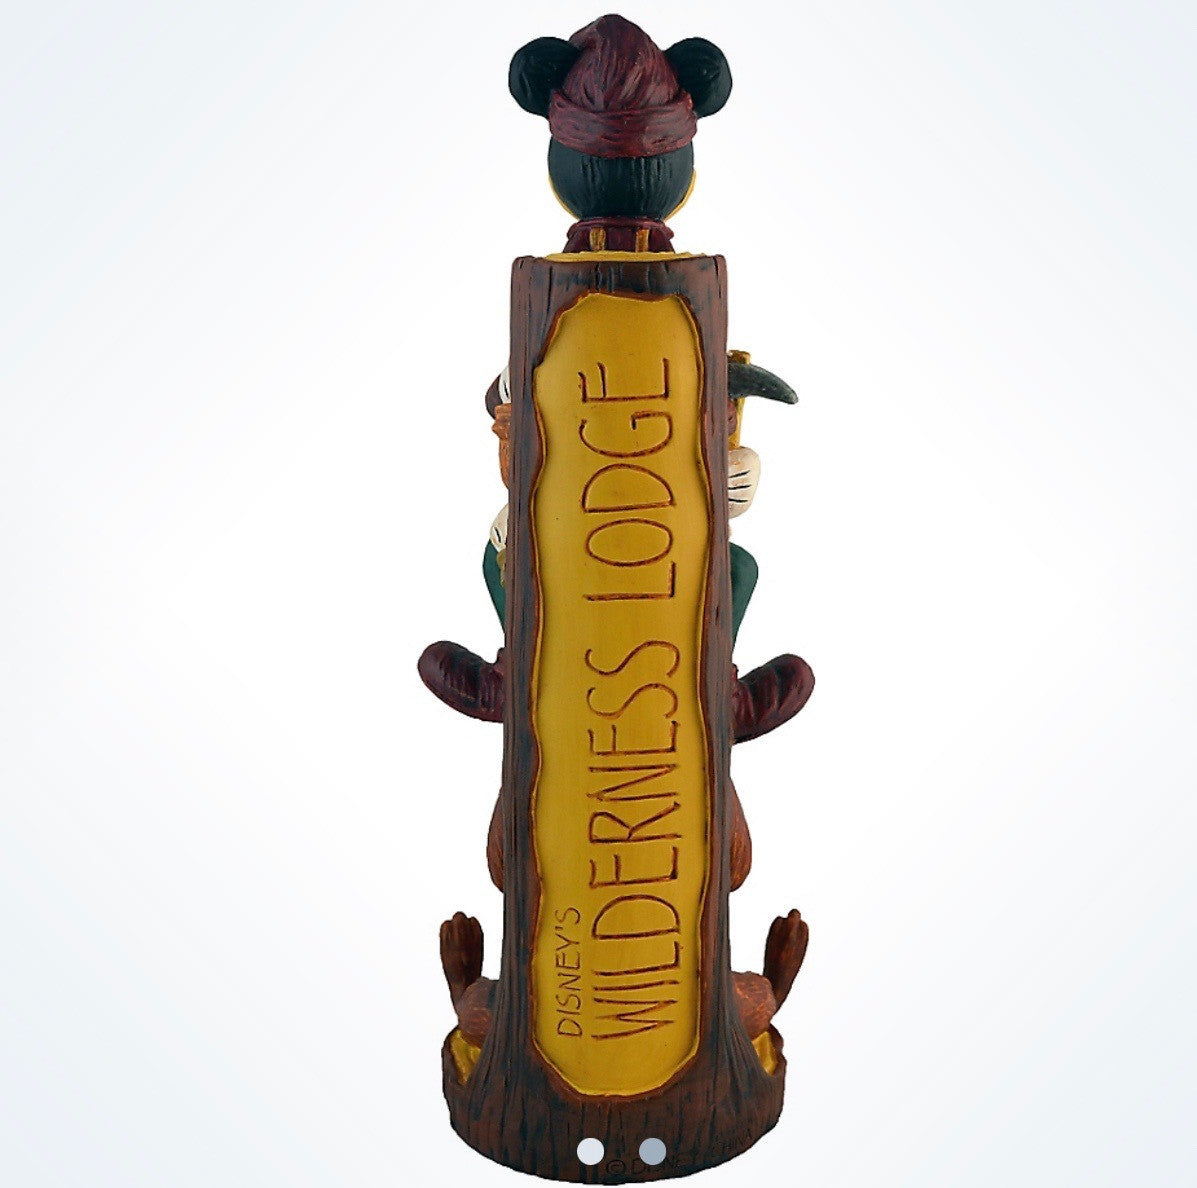 Disney Parks Wilderness Lodge Mickey & Friends Totem Pole Resin Figurine New